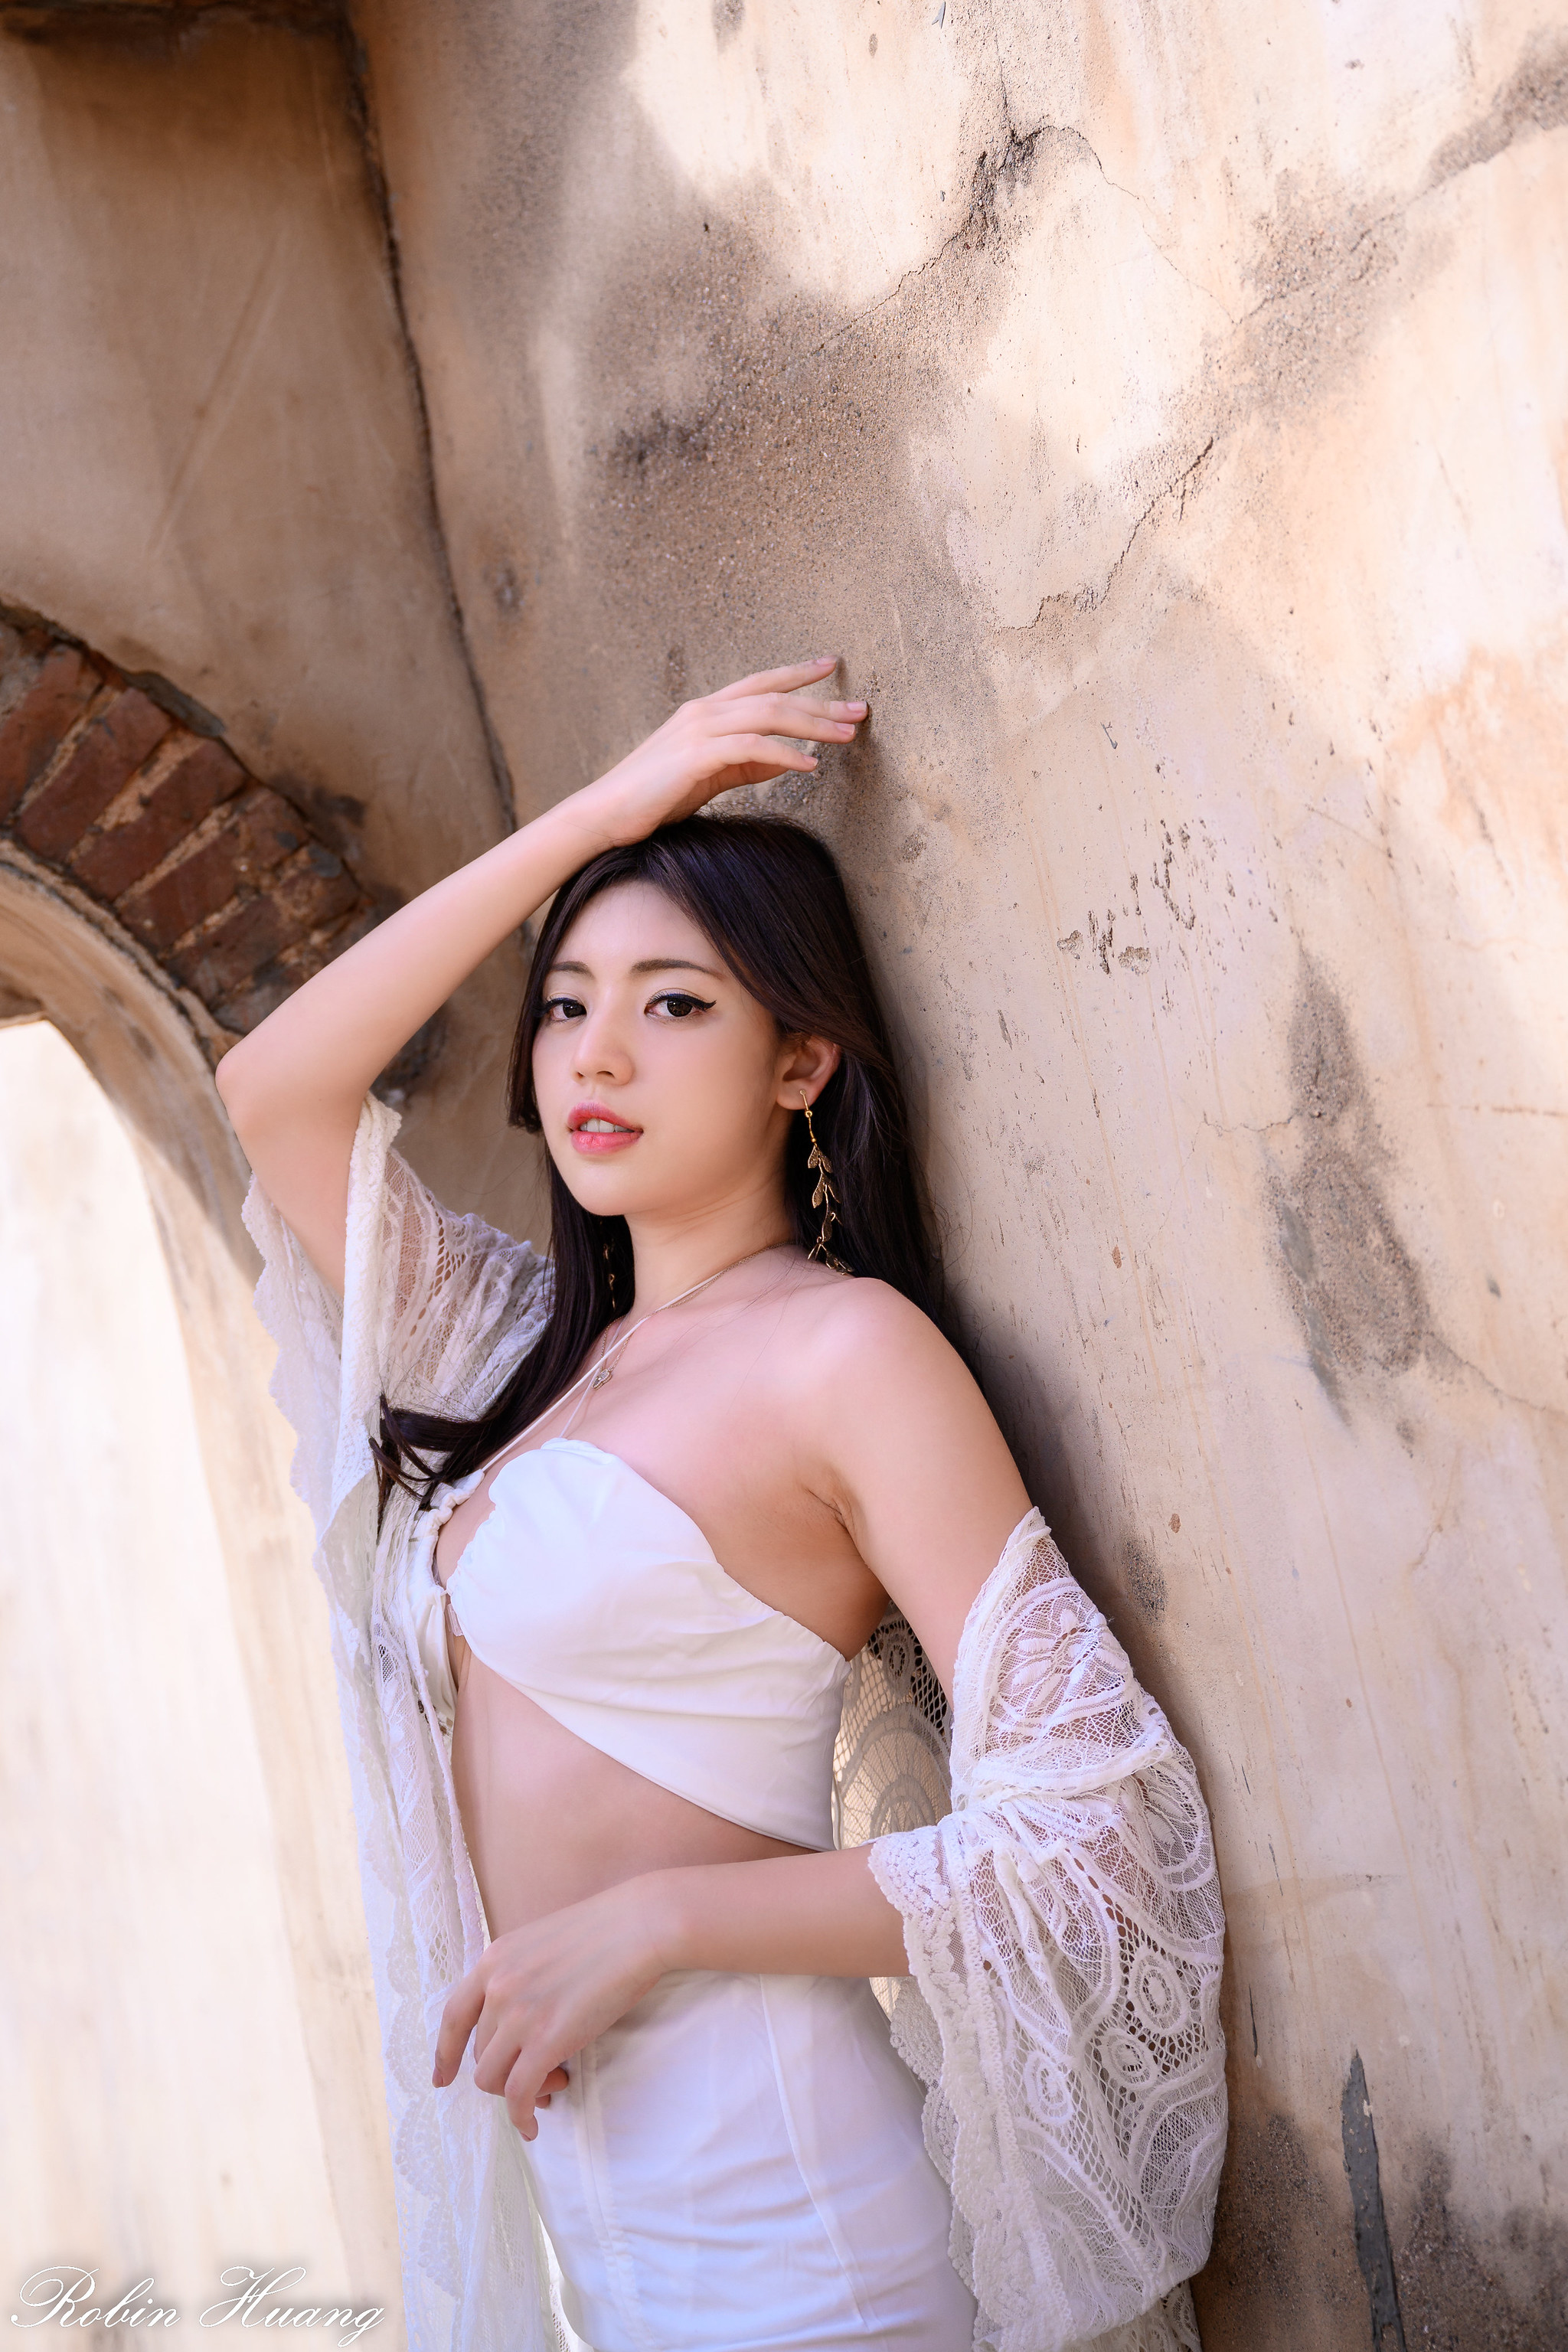 Robin Huang Women Dark Hair Asian Dress White Clothing Makeup Outdoors Warm 2048x3072